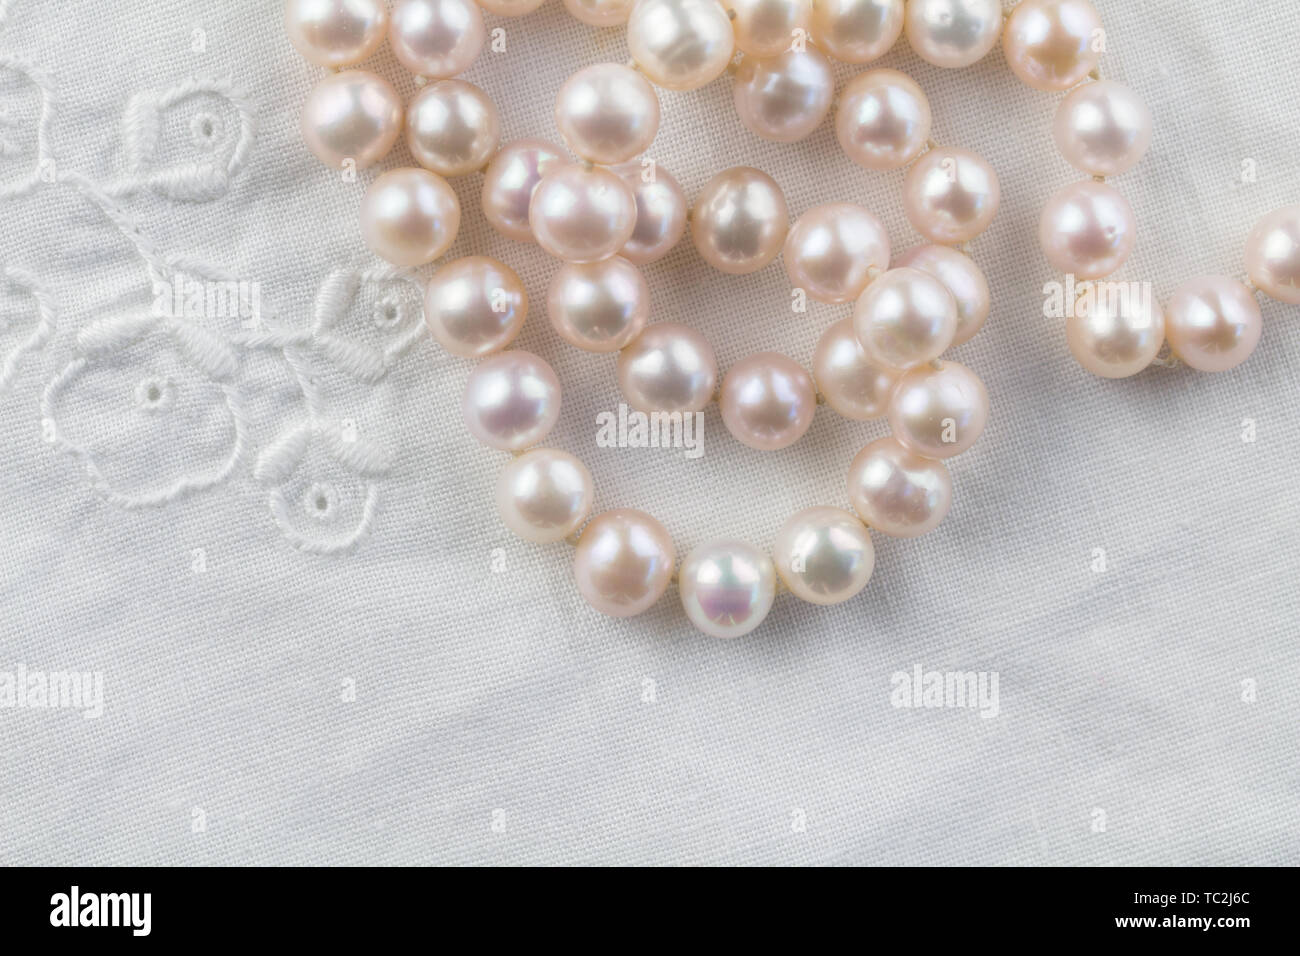 Perla rosa real fotografías e imágenes de alta resolución - Alamy